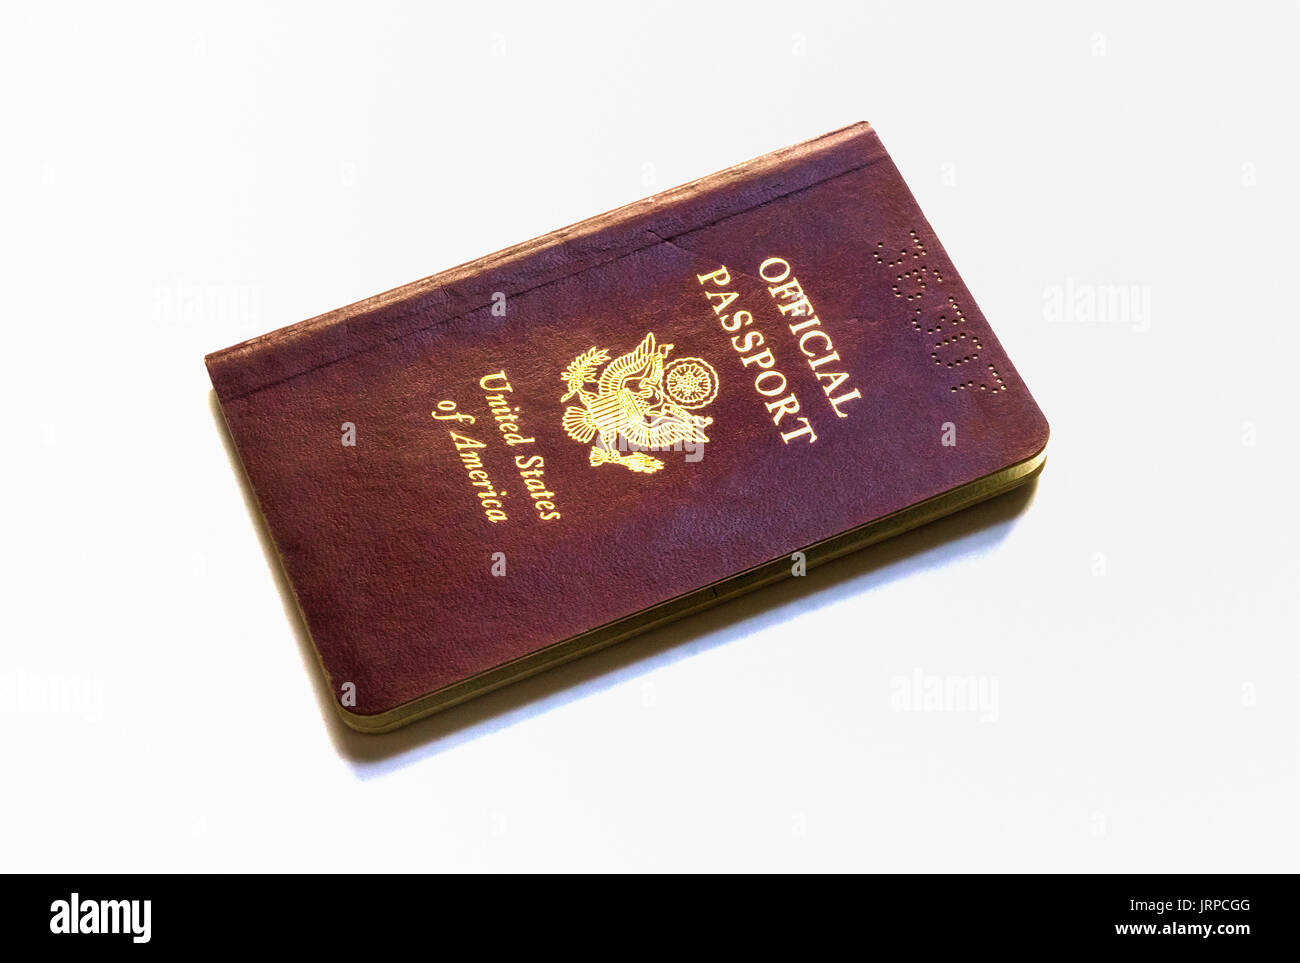 Marrón rojizo pasaporte oficial estadounidense se muestra sobre un fondo blanco. Foto de stock